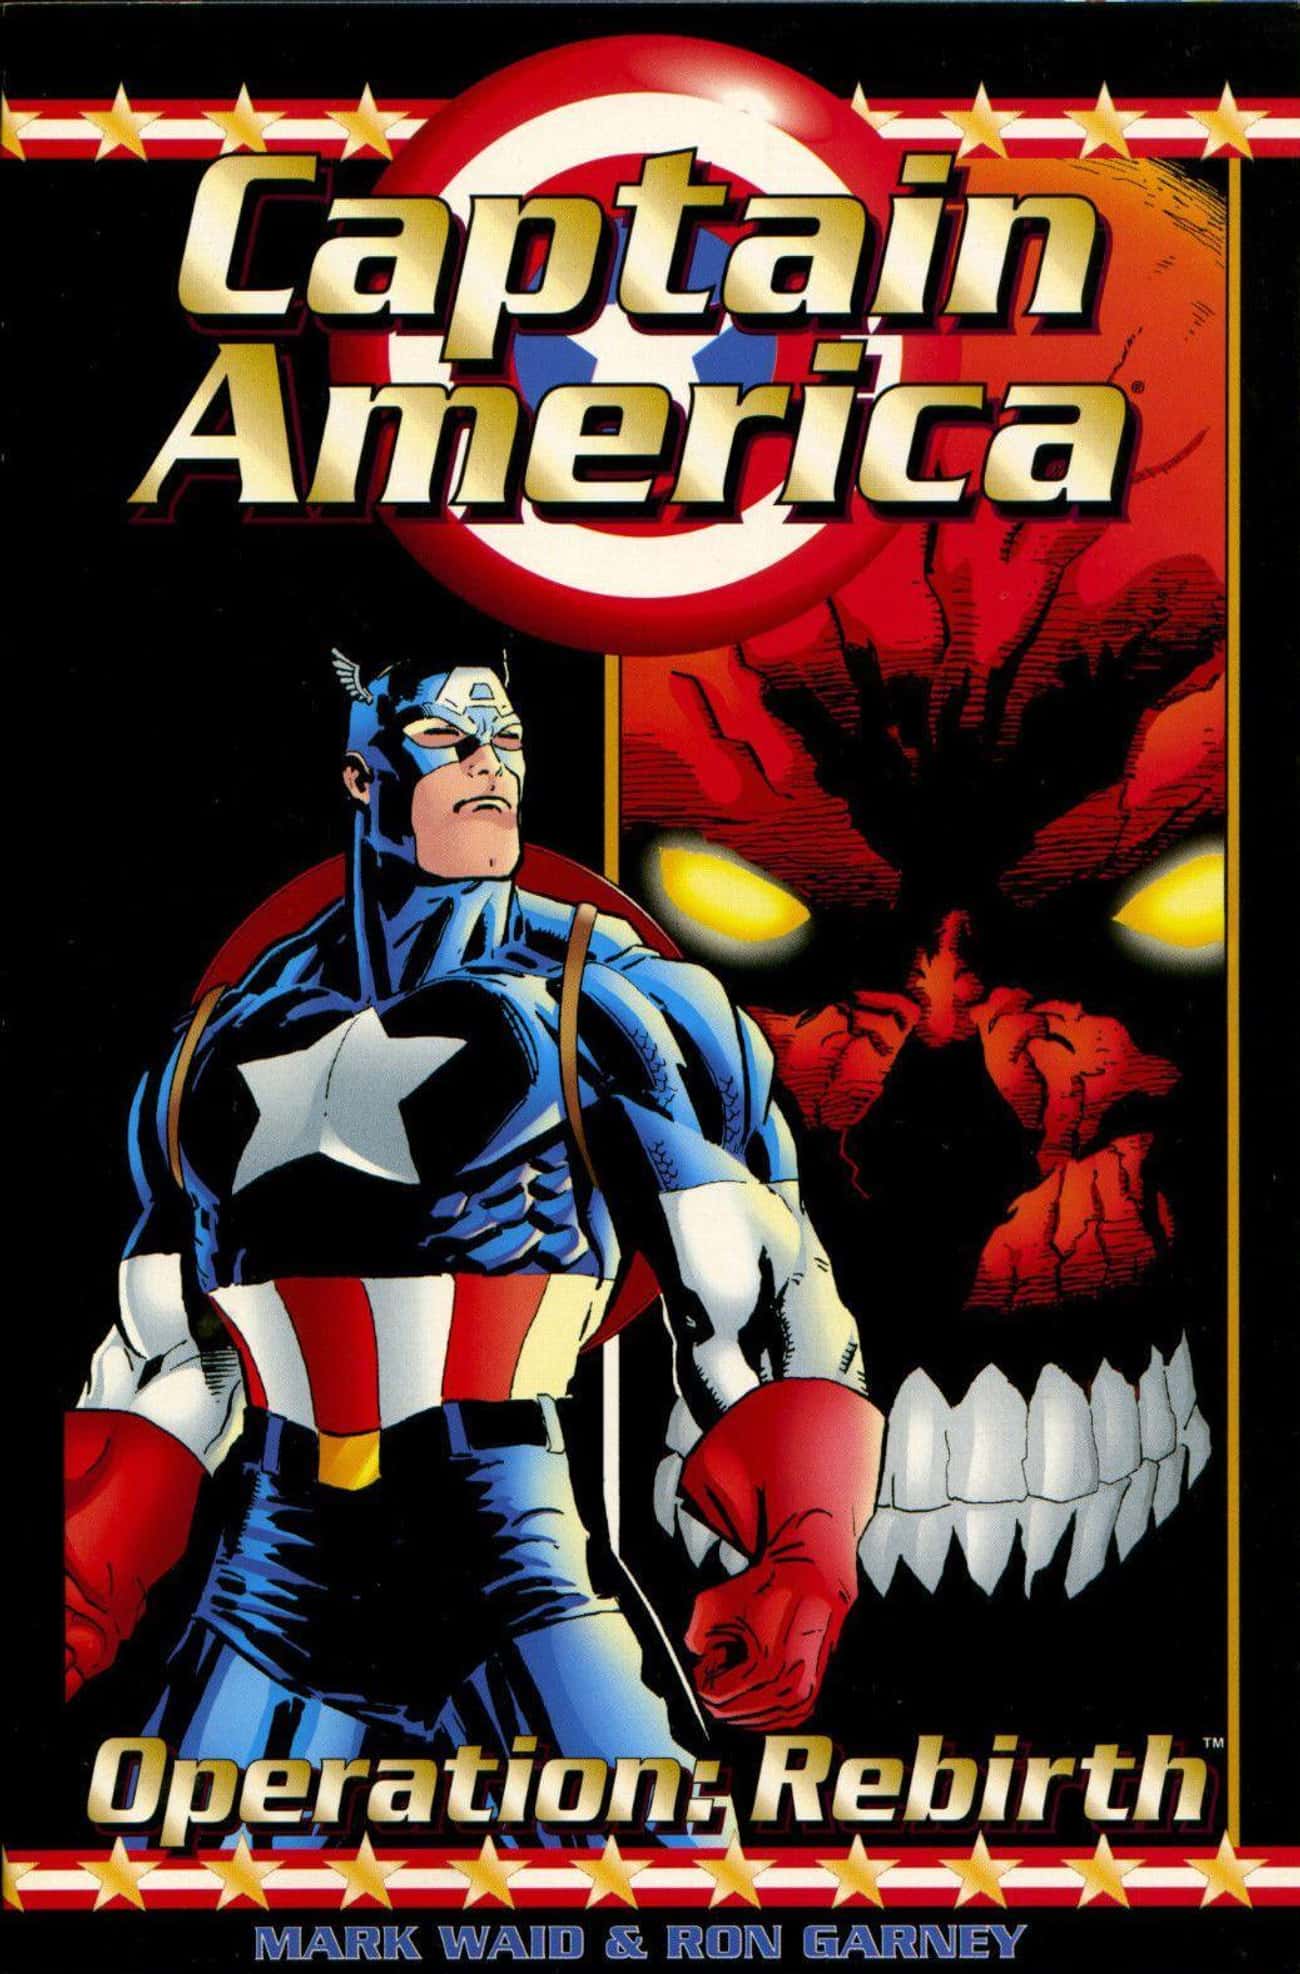 Marvel Comics: Best Captain America storylines